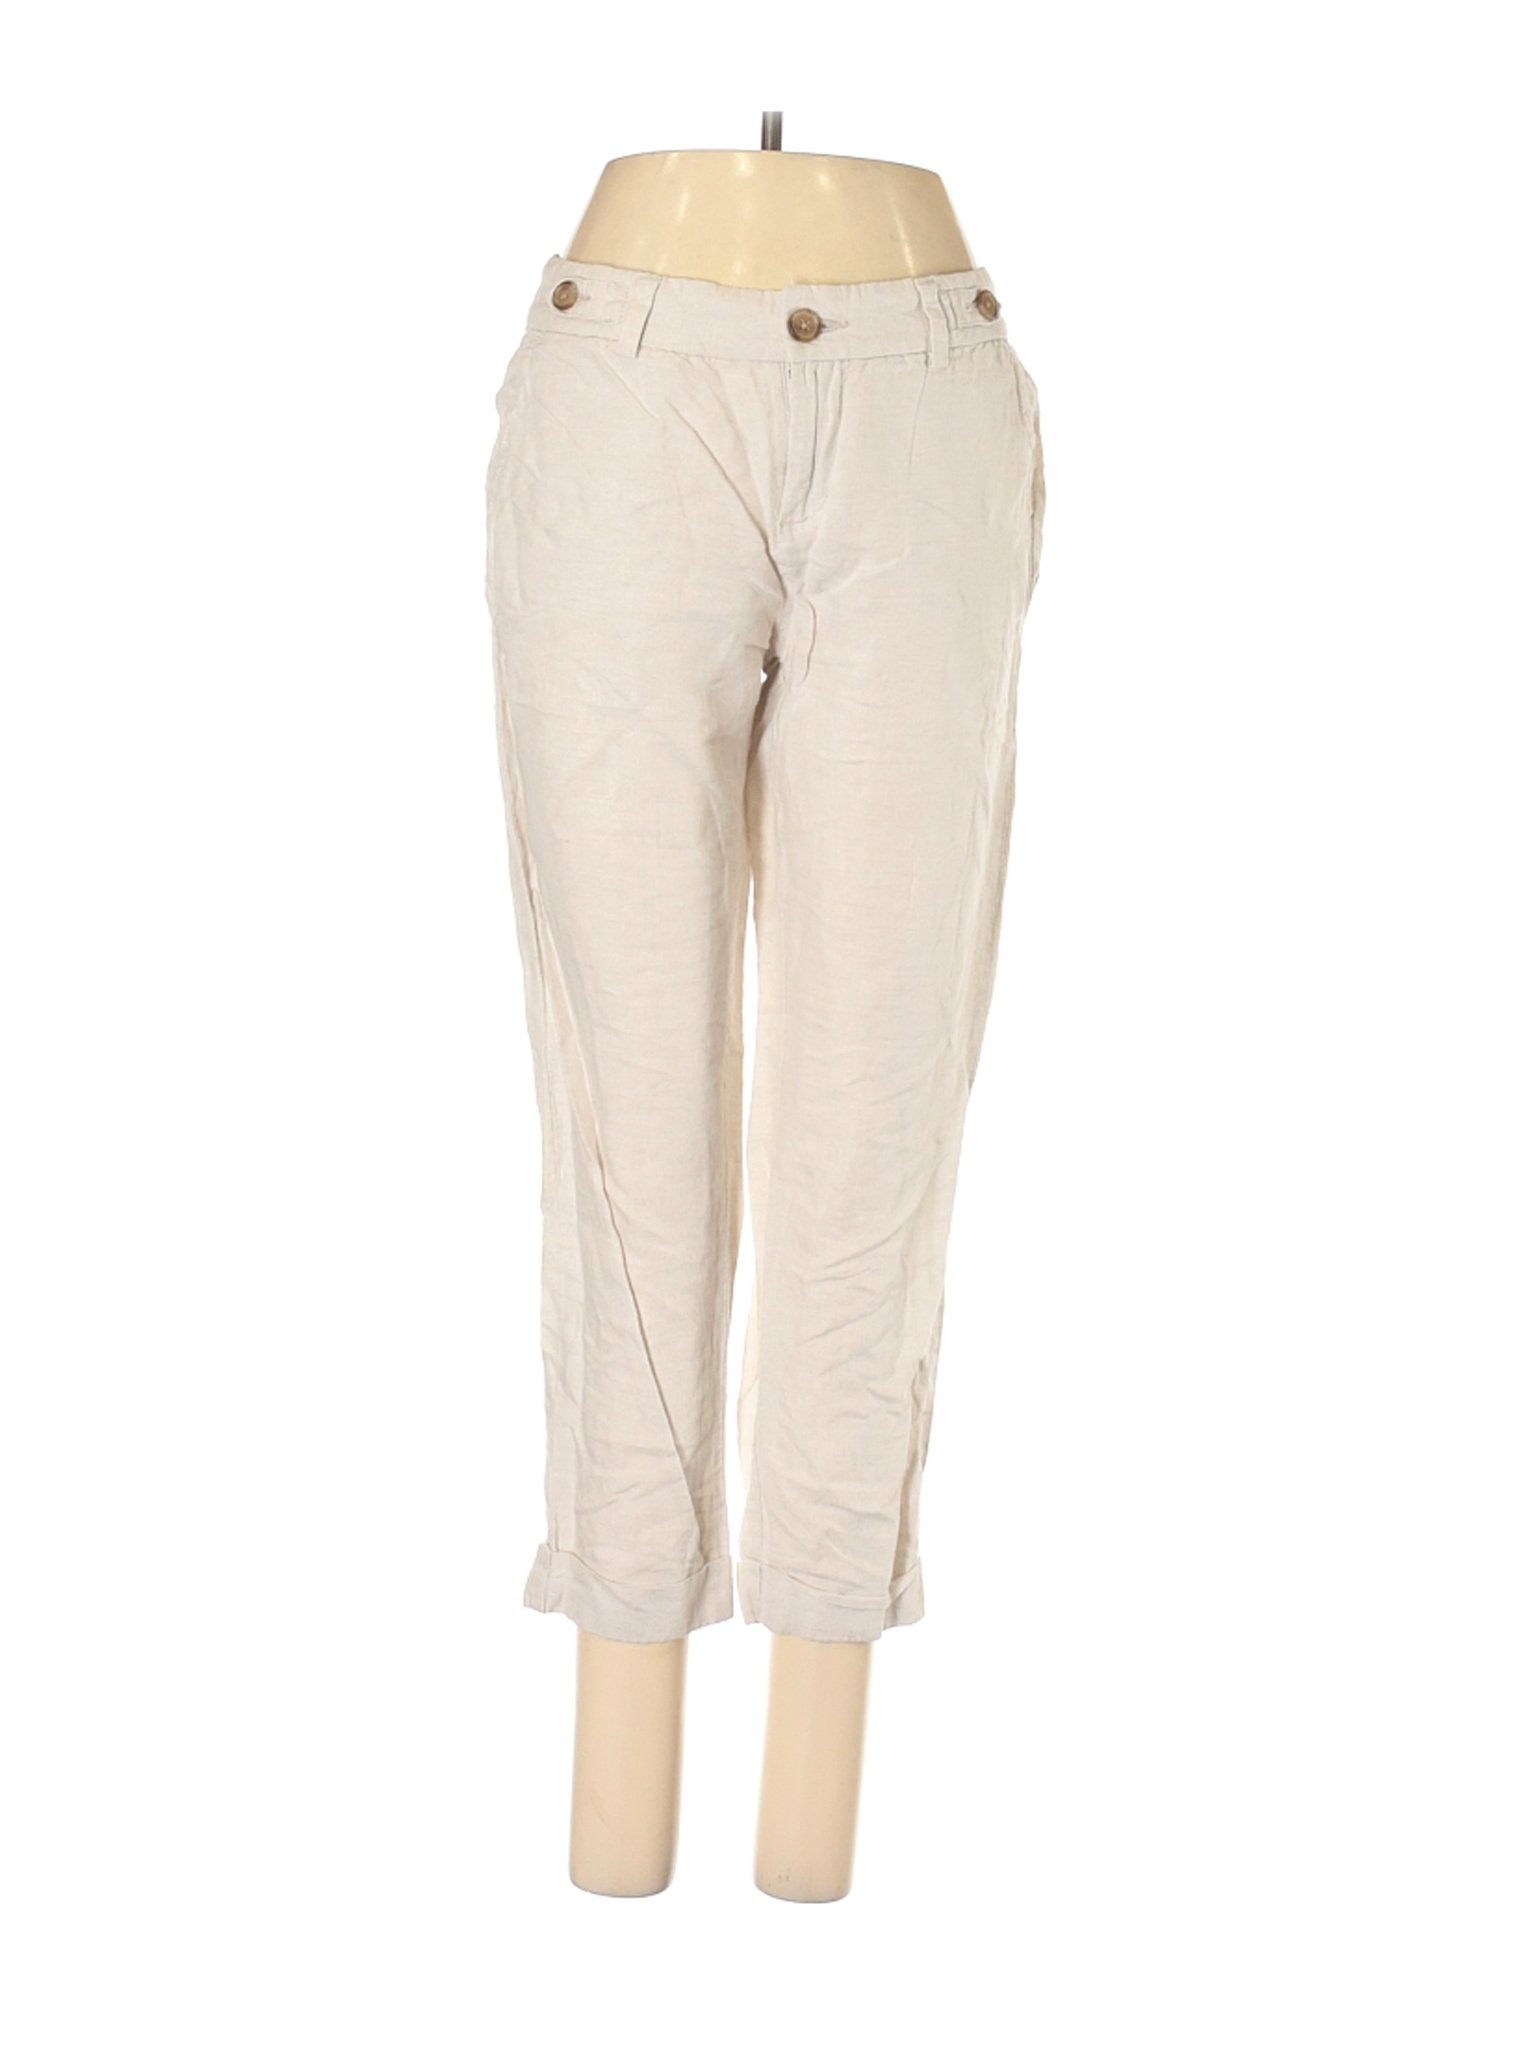 Banana Republic Factory Store Women Ivory Linen Pants 2 | eBay